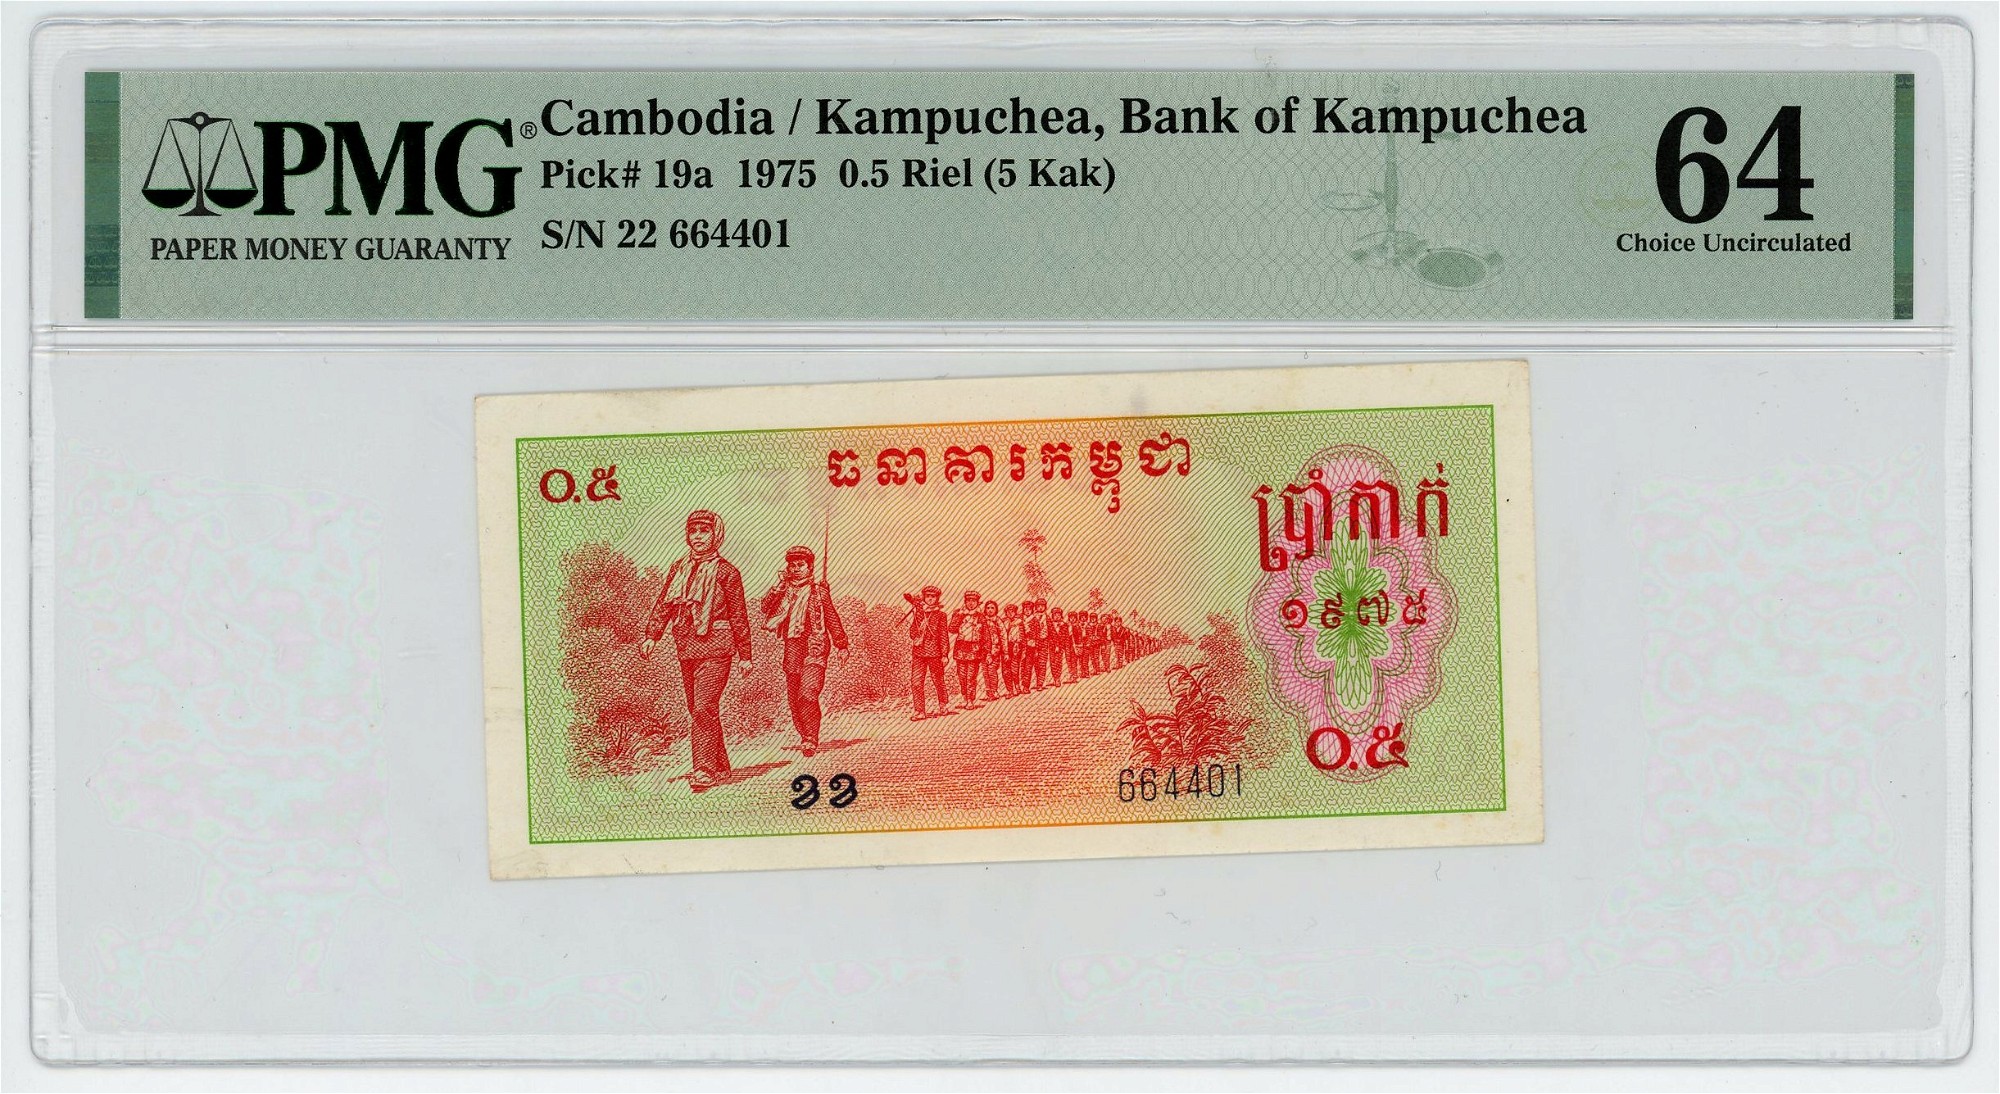 Cambodia Bank of Kampuchea 5 Kak (0,5 Riel) 1975 PMG 64 | Katz Auction